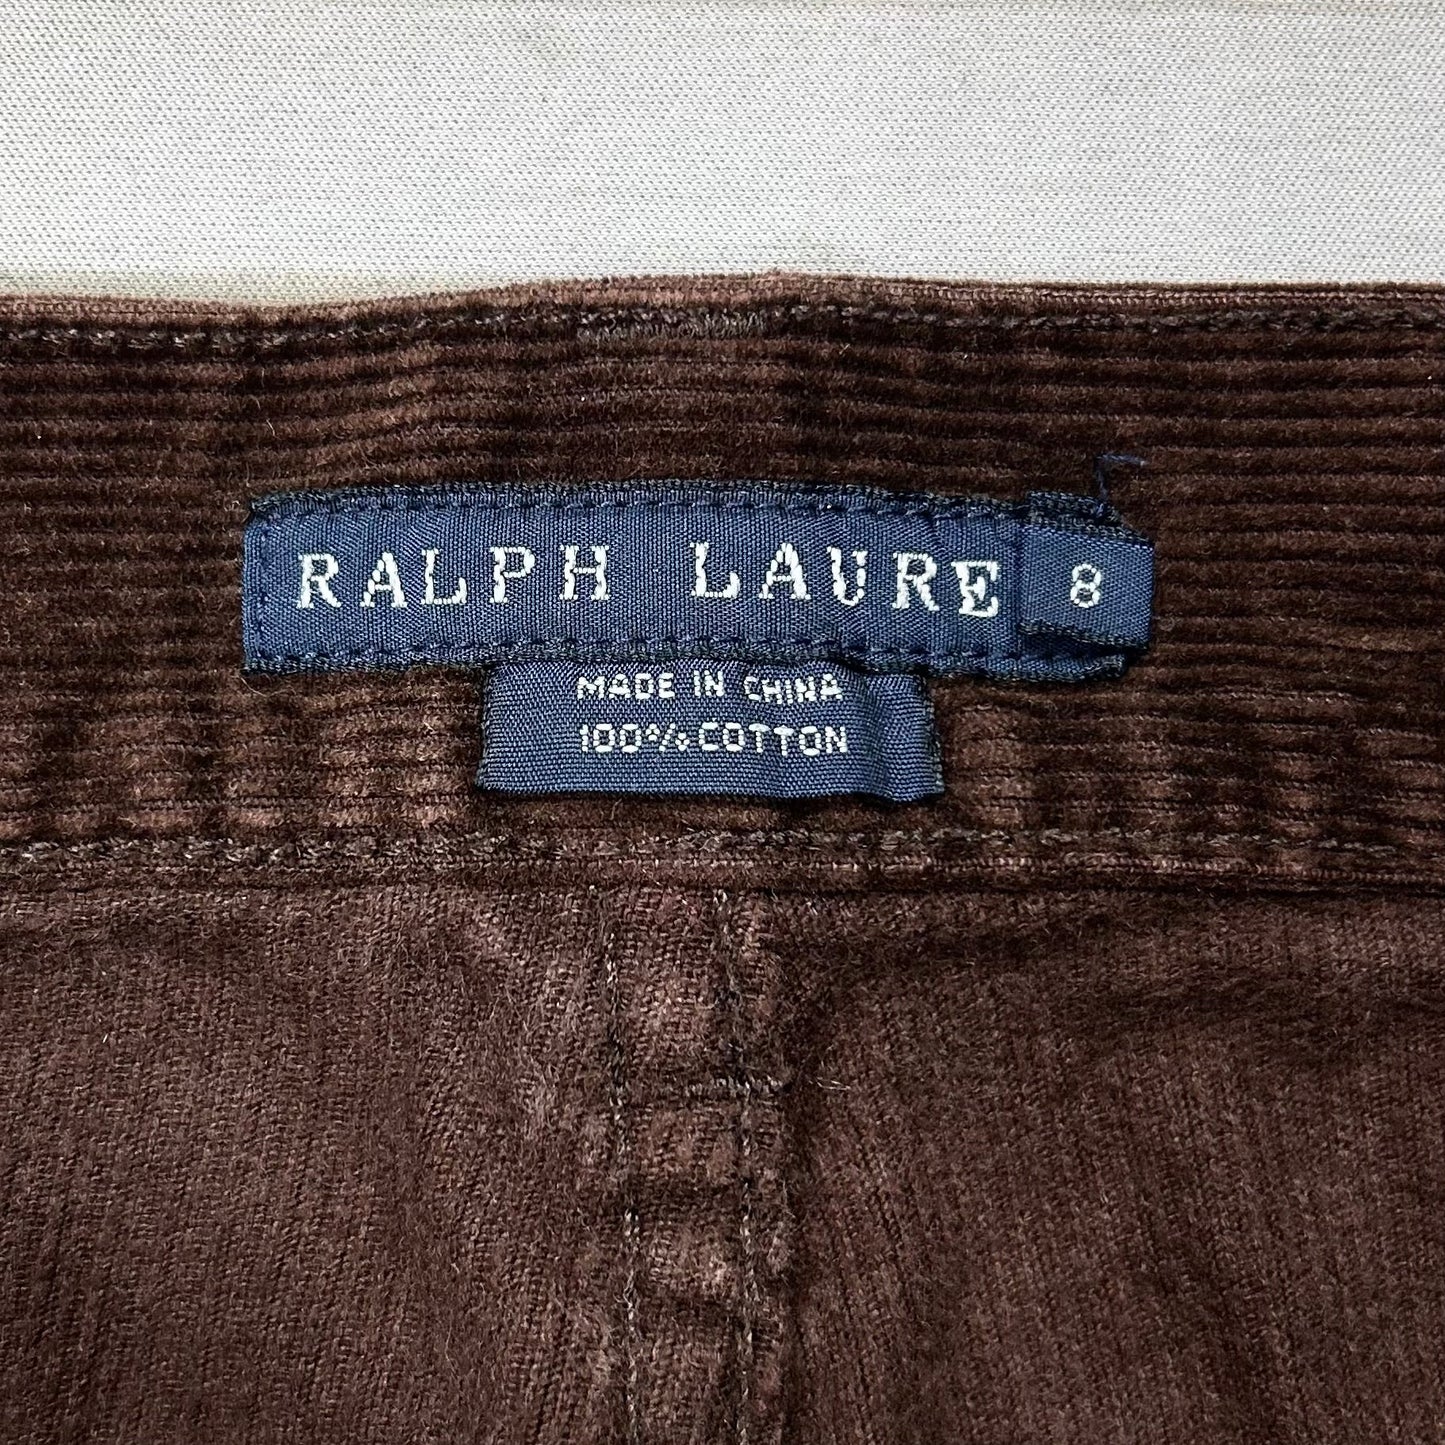 Pants Corduroy By Ralph Lauren  Size: 8